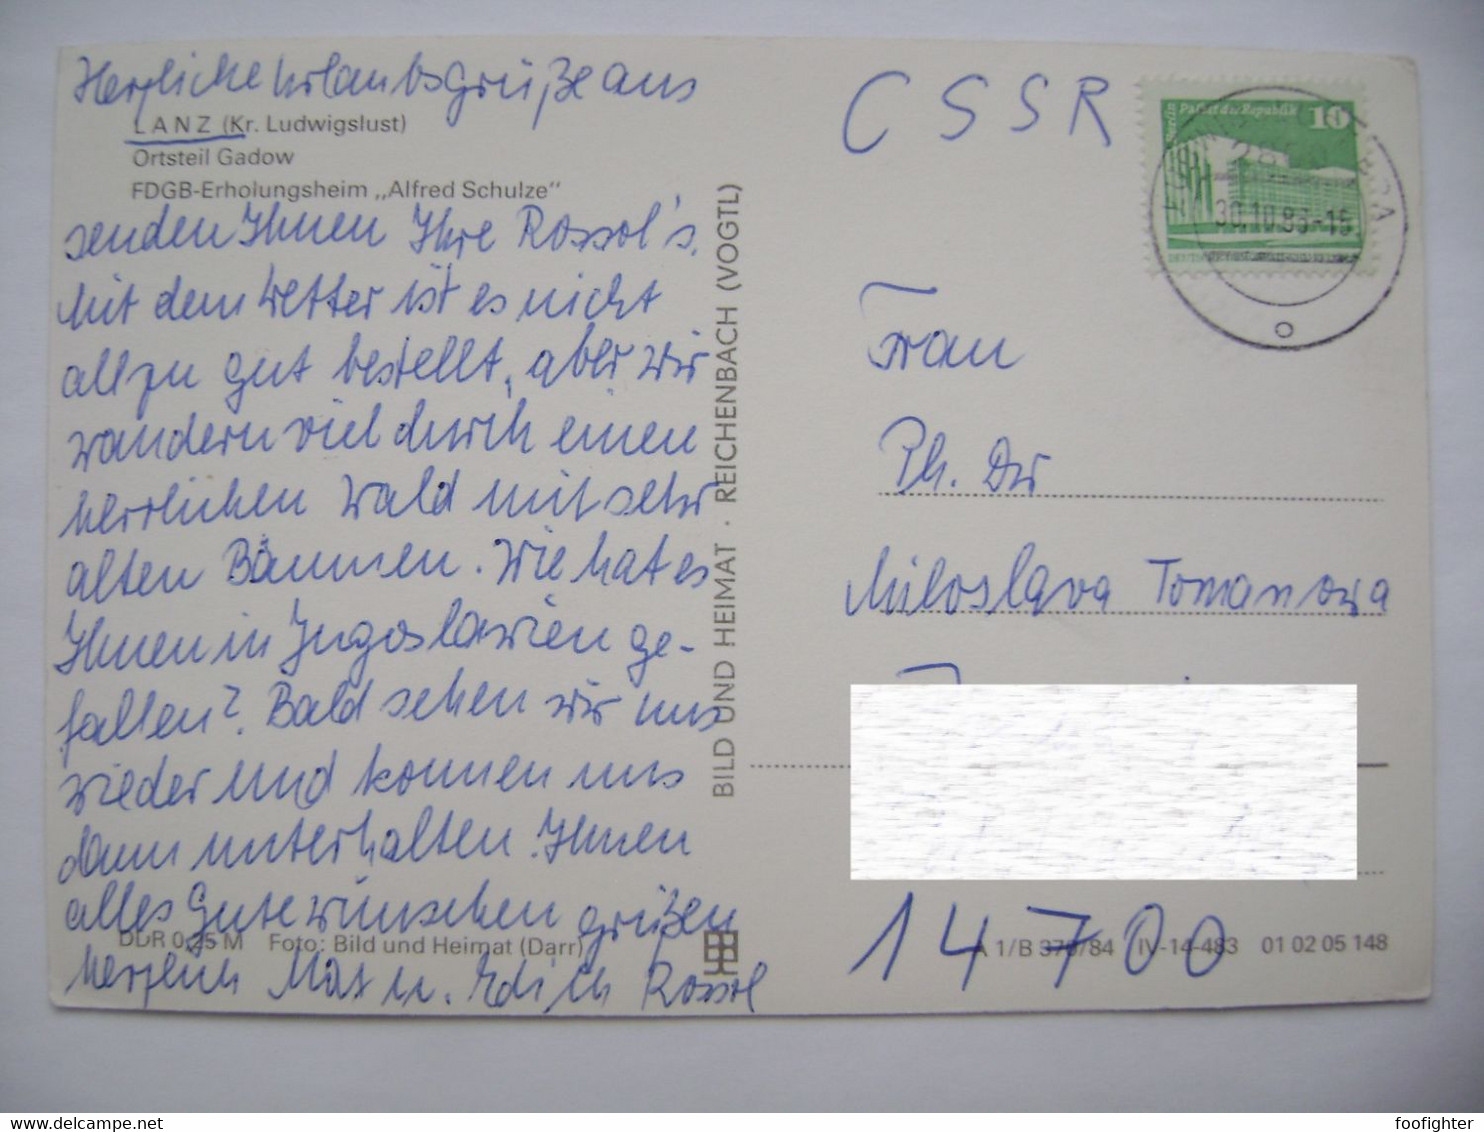 LANZ Kr. Ludwigslust Ortsteil Gadow FDGB-Erholungsheim "Alfred Schulze" - Posted 1985 - Ludwigslust